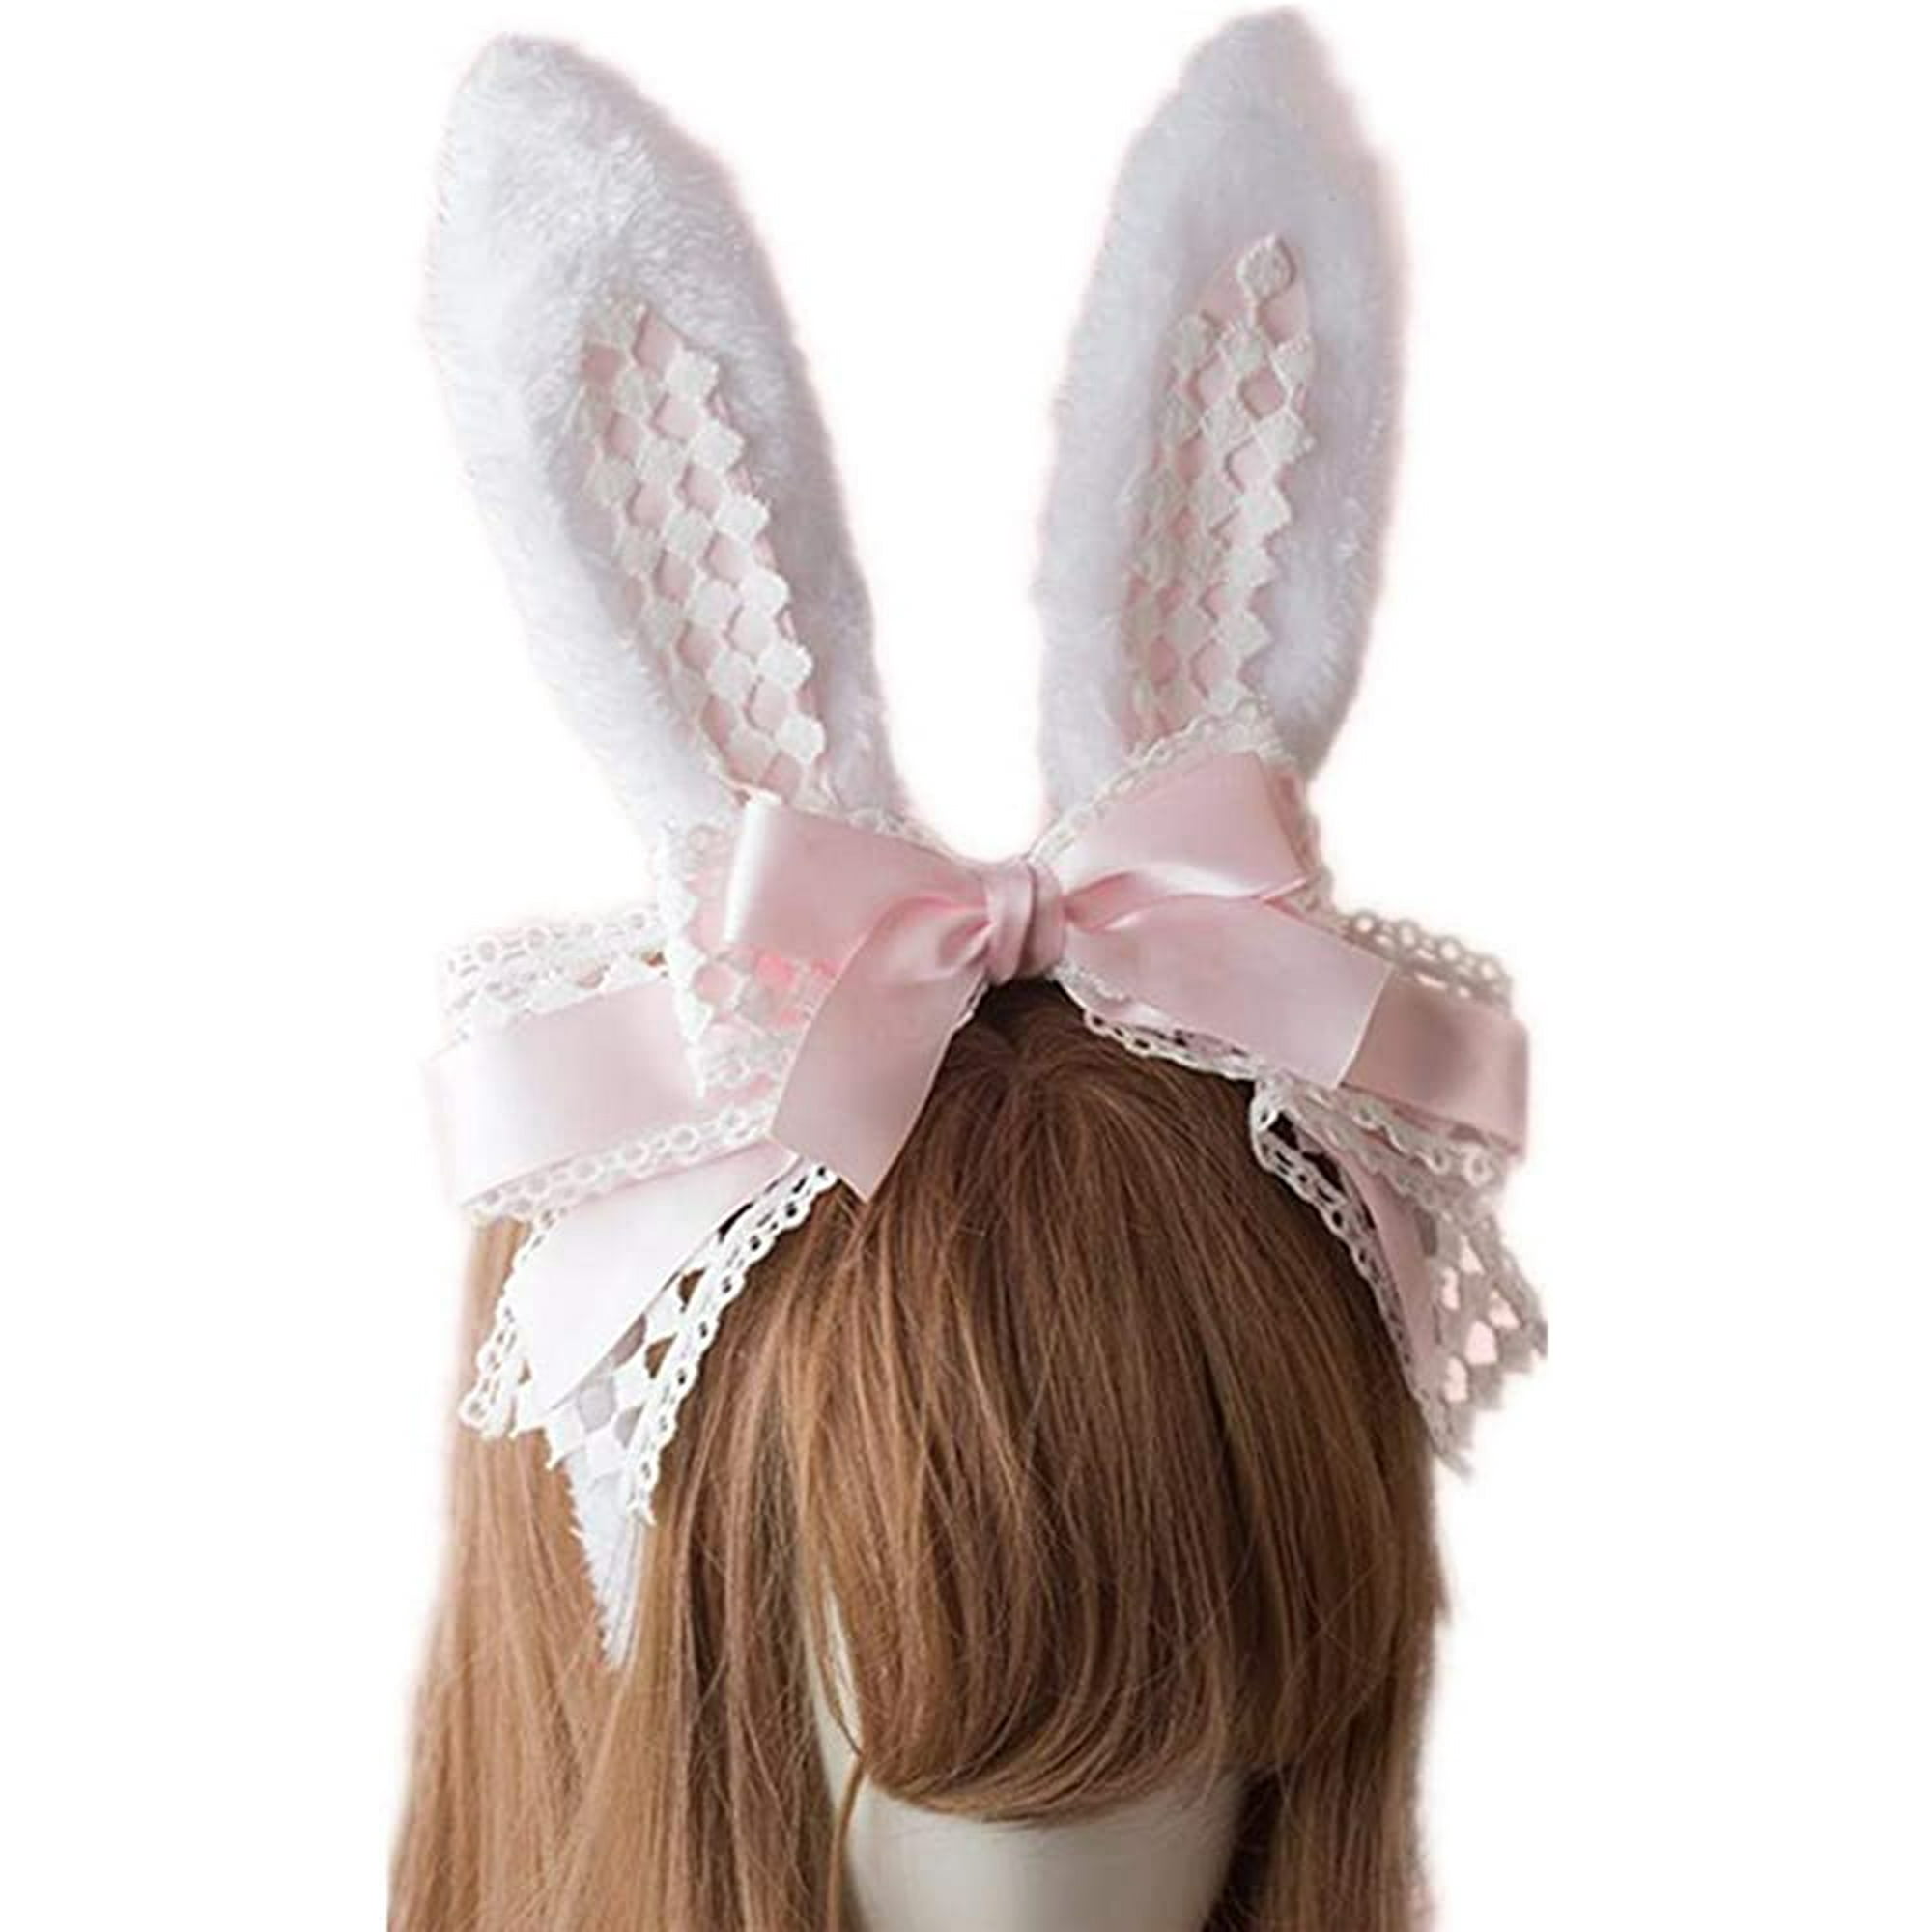 TureClos Easter Party Kawaii Hair Accessory Headband Gothic Lolita Cosplay  Cute Rabbit Bunny Ears Bow Lace Hair Band Headwear 